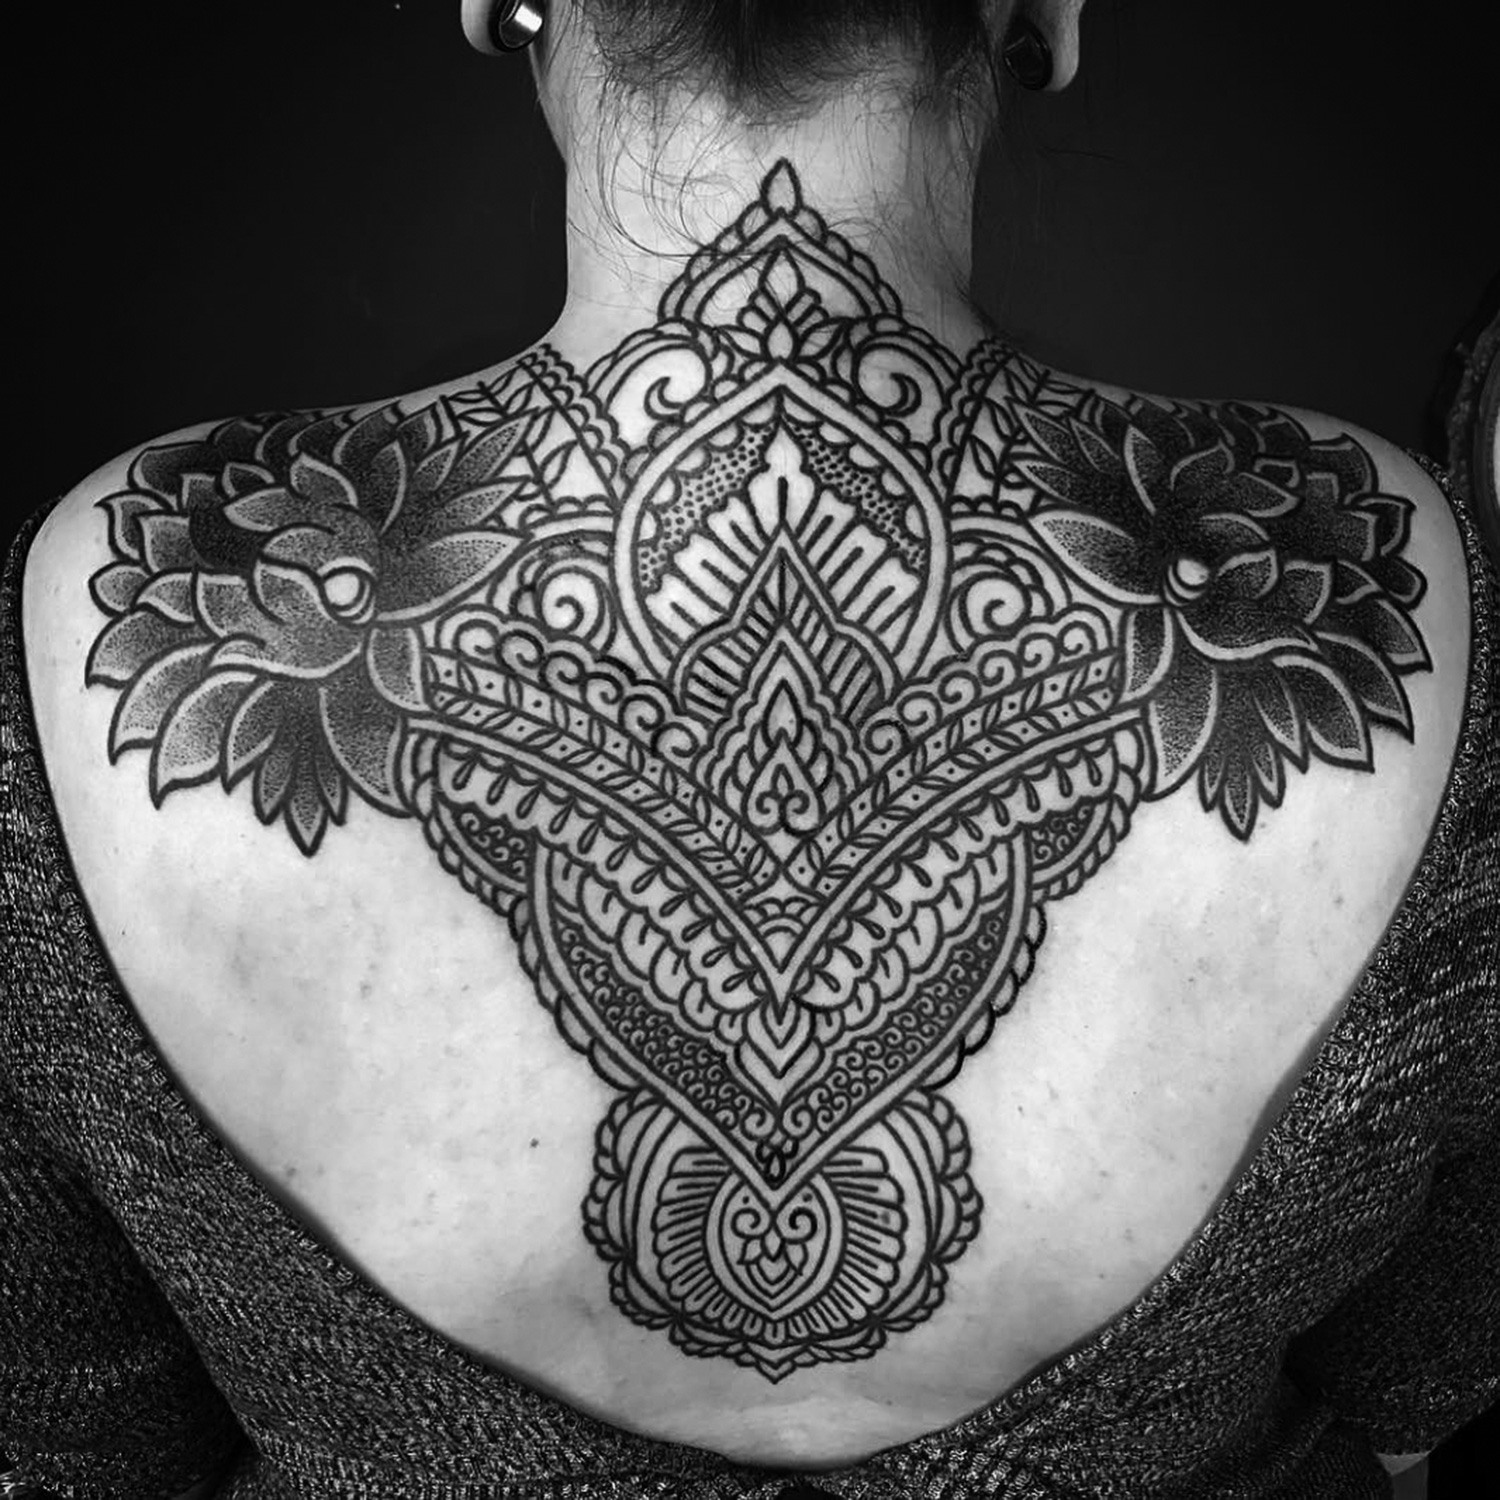 Ellemental Tattoos - upper back and shoulders ornamental tattoo